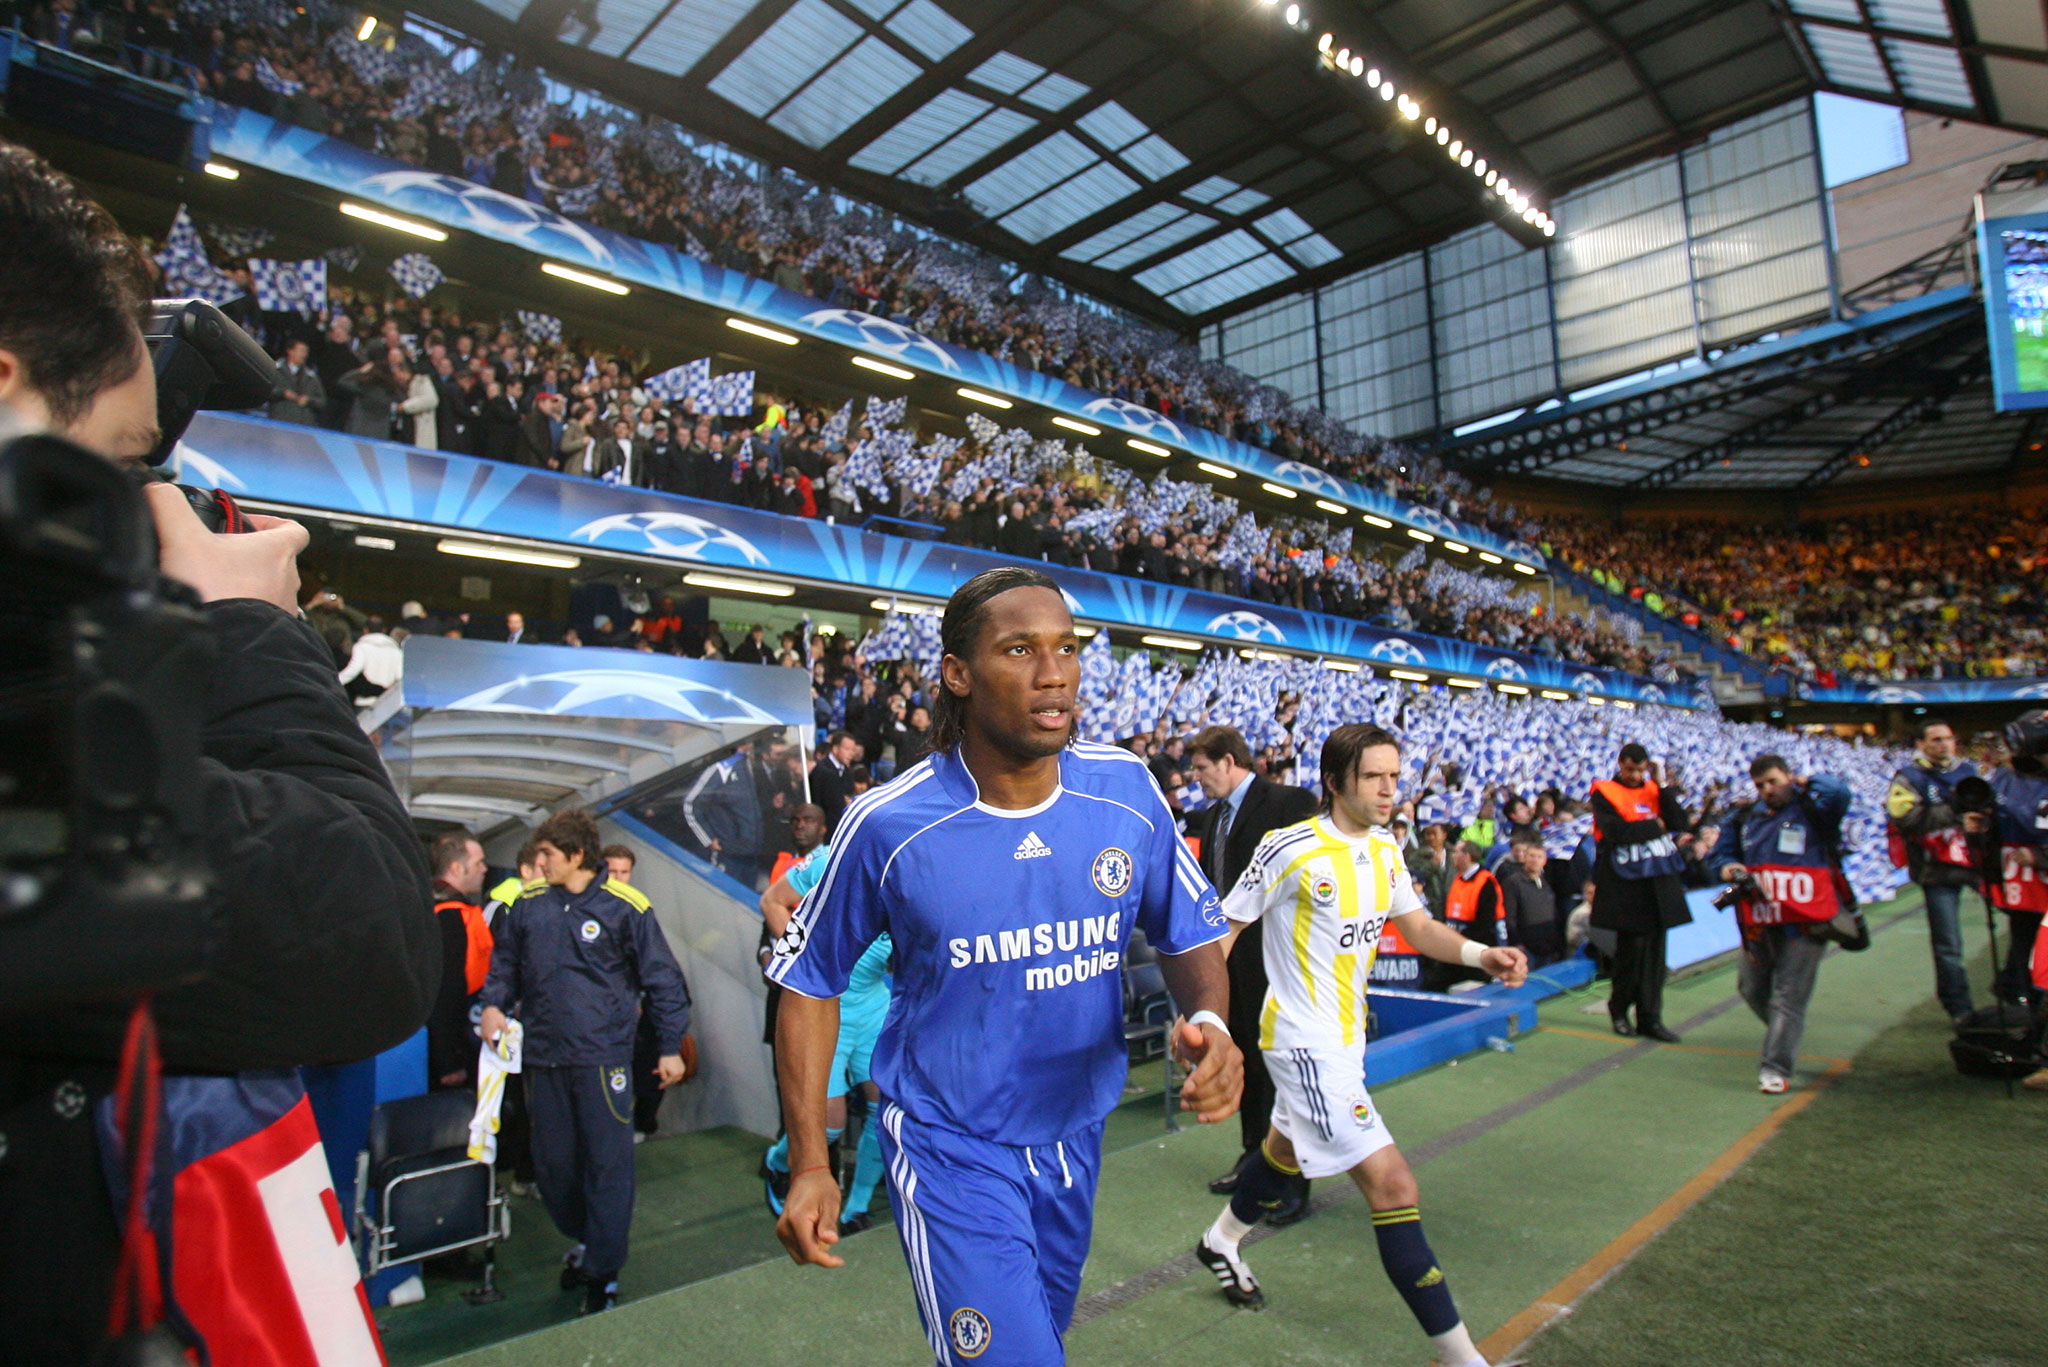 Didier Drogba at Stamford Bridge stadium on 8/4/2008. © photoyh / Shutterstock